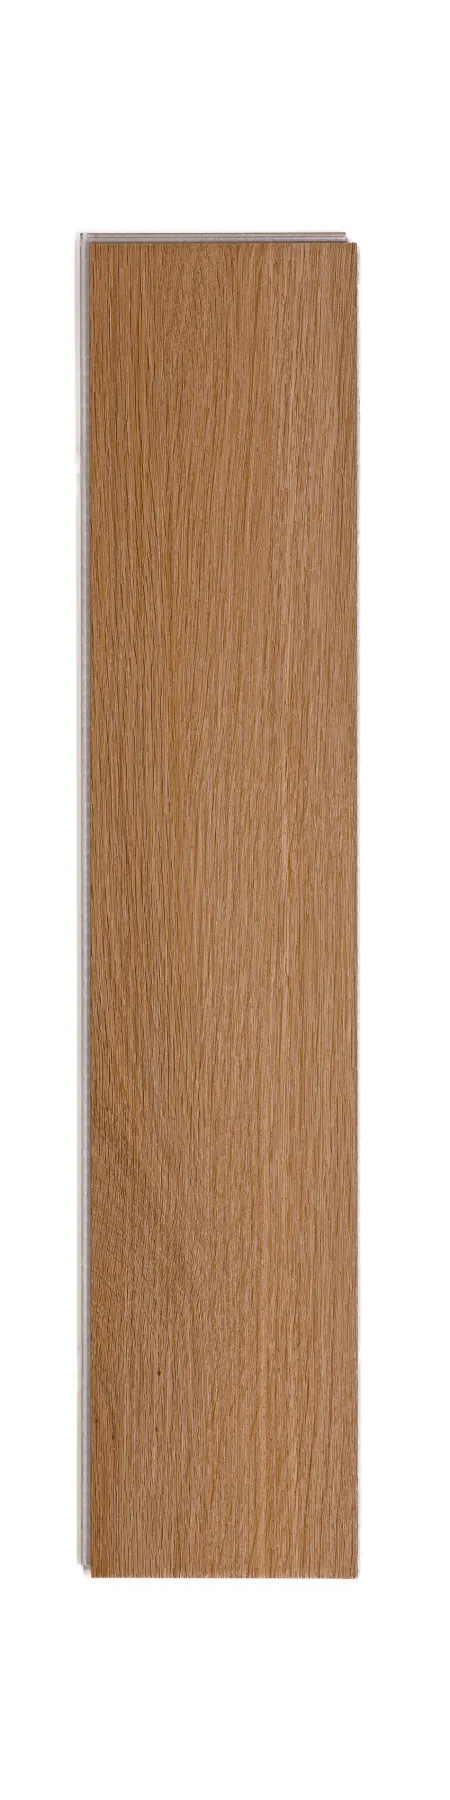 Herringbone vinyl SPC RIGID podlaha 5/0,3 mm s podložkou JÄGERNDORF 625x125 mm (0,937 m2)